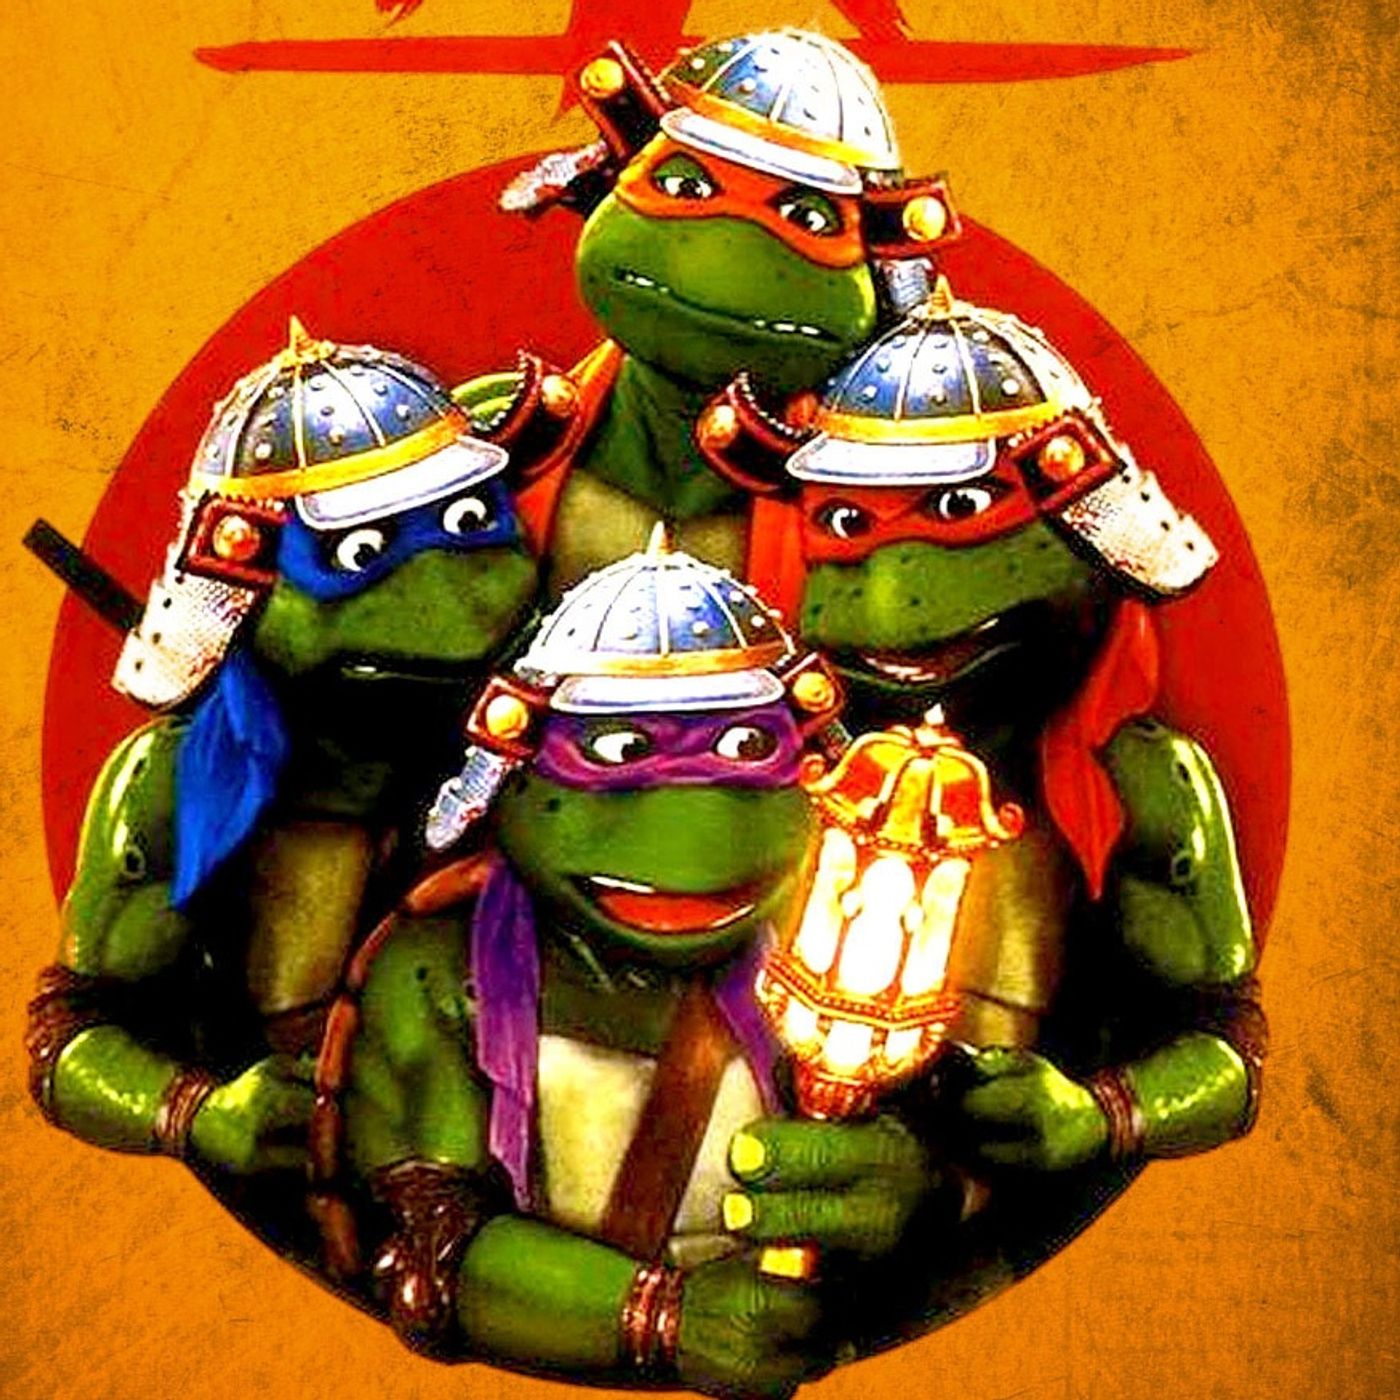 Teenage Mutant Ninja Turtles 3 Movie Review